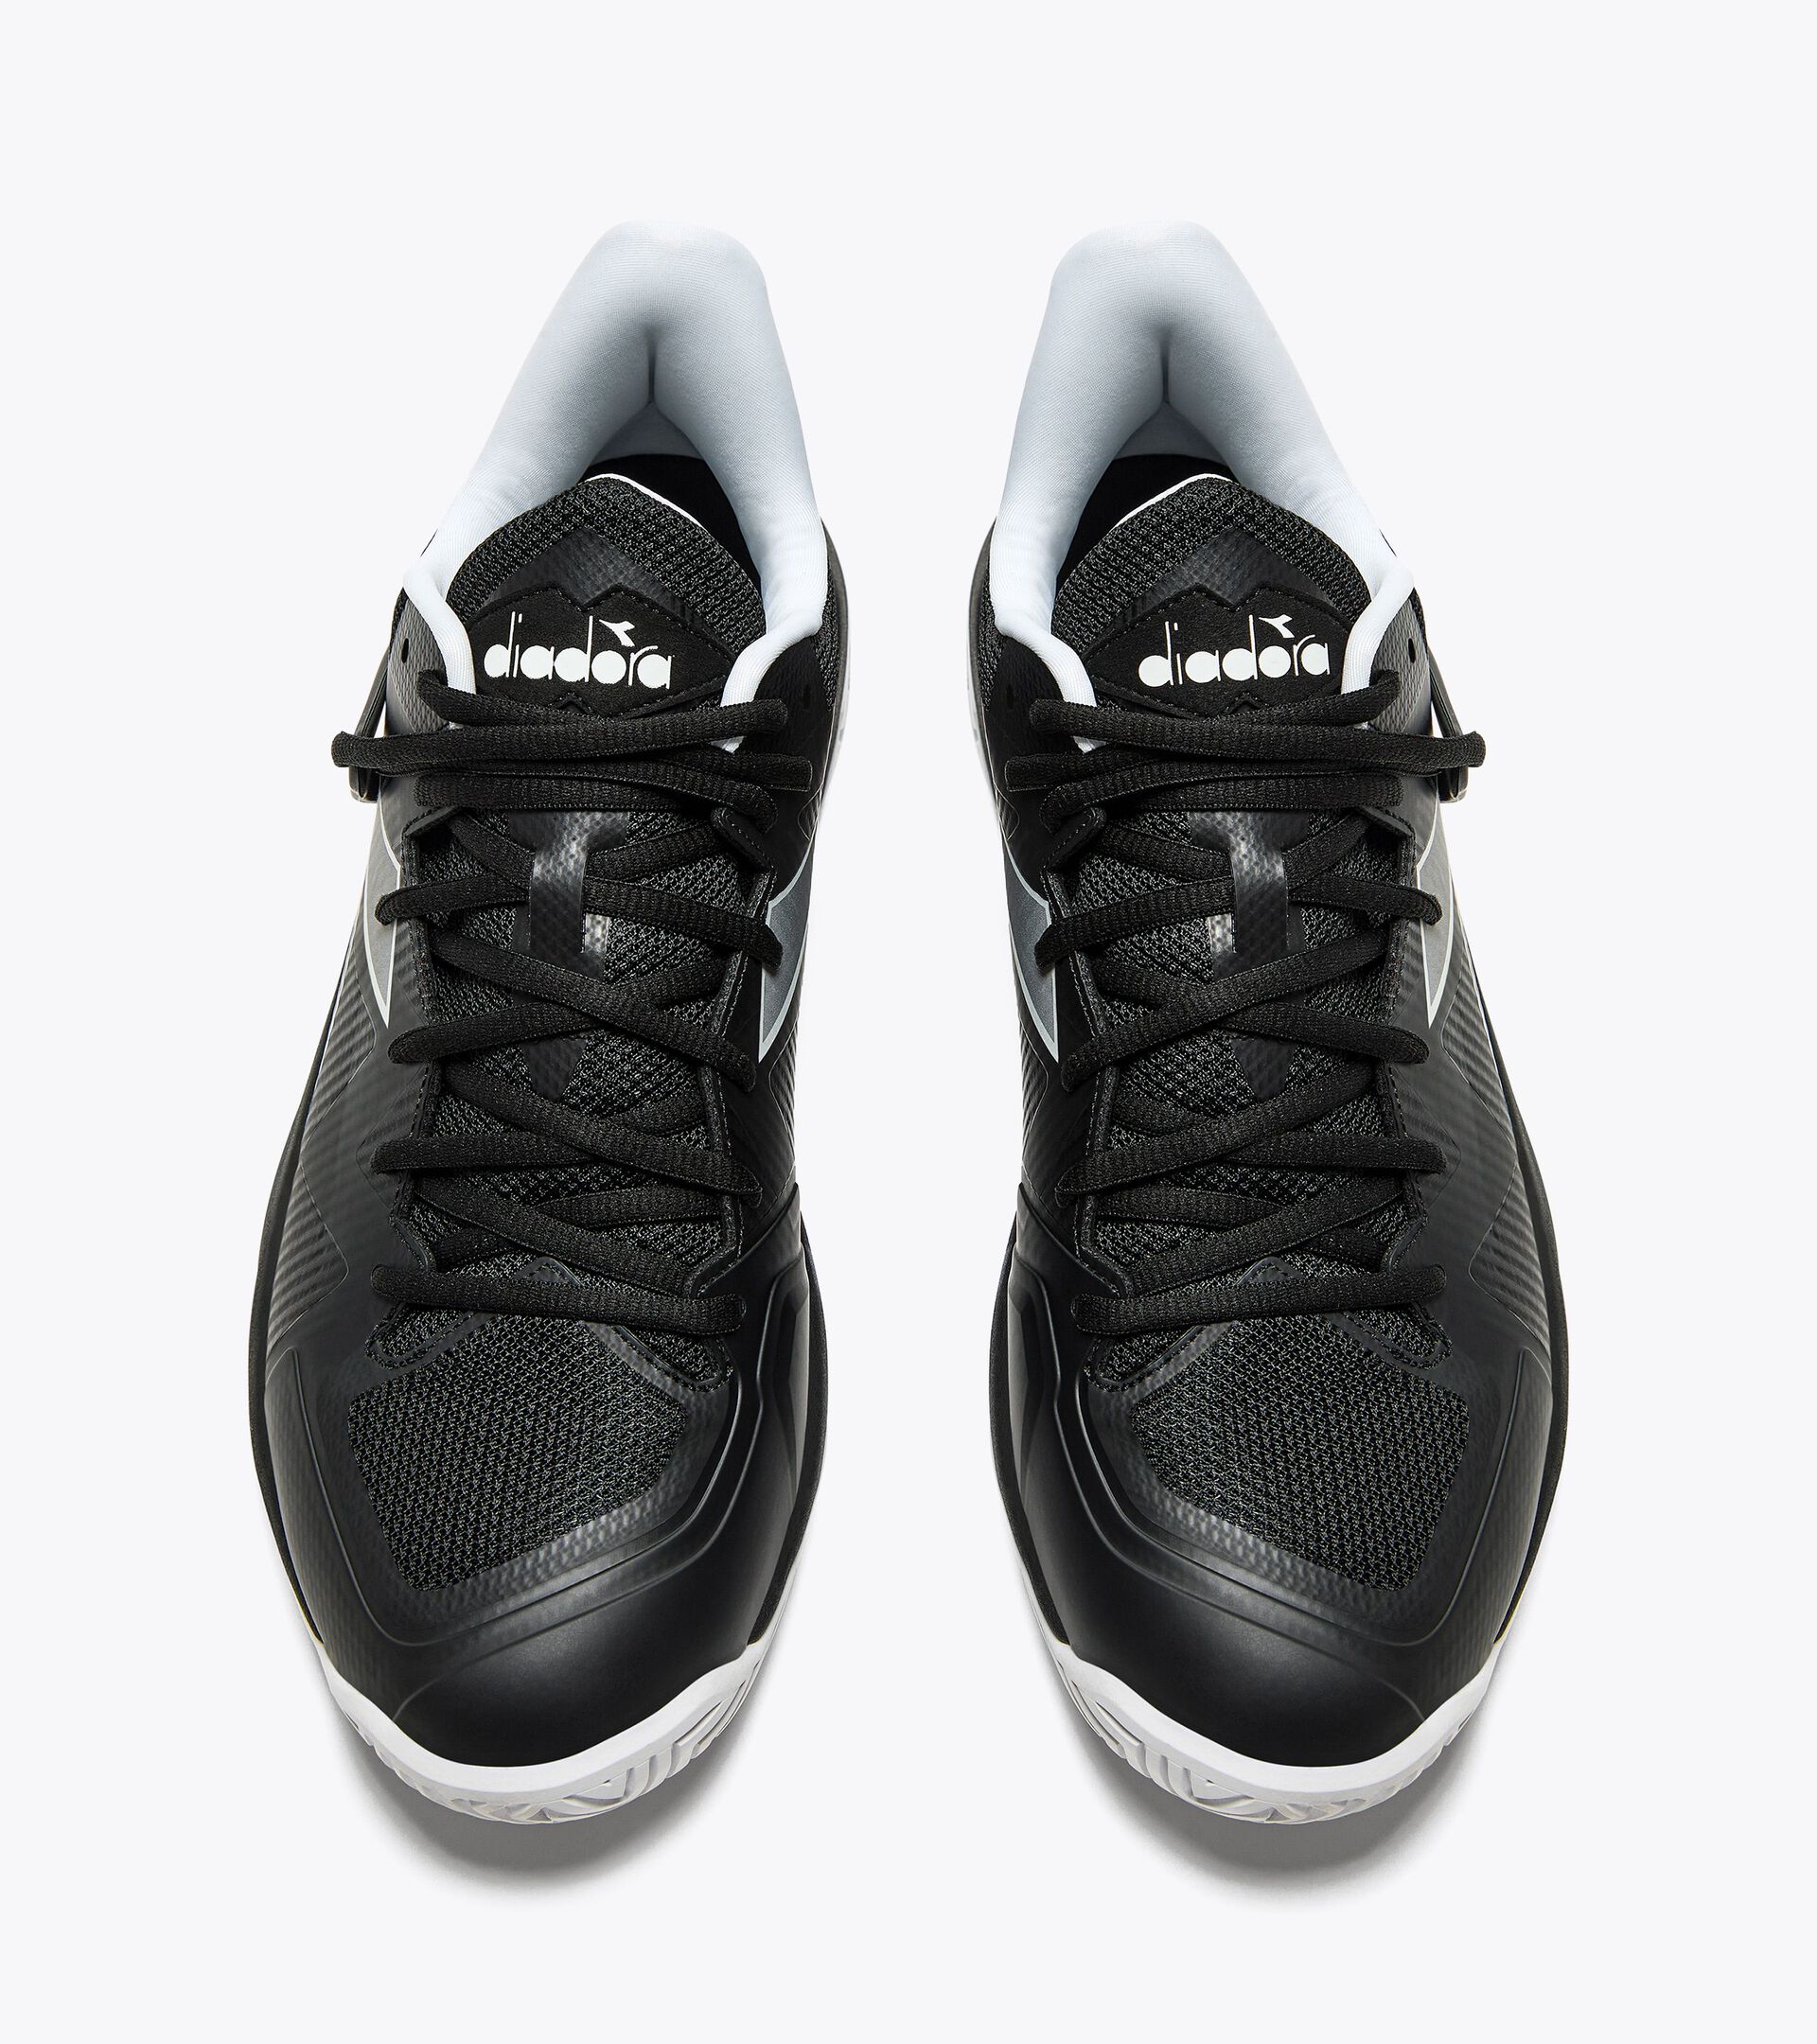 Tennis shoes for hard surfaces or clay - Men B.ICON 2 AG BLACK/SILVER/WHITE - Diadora